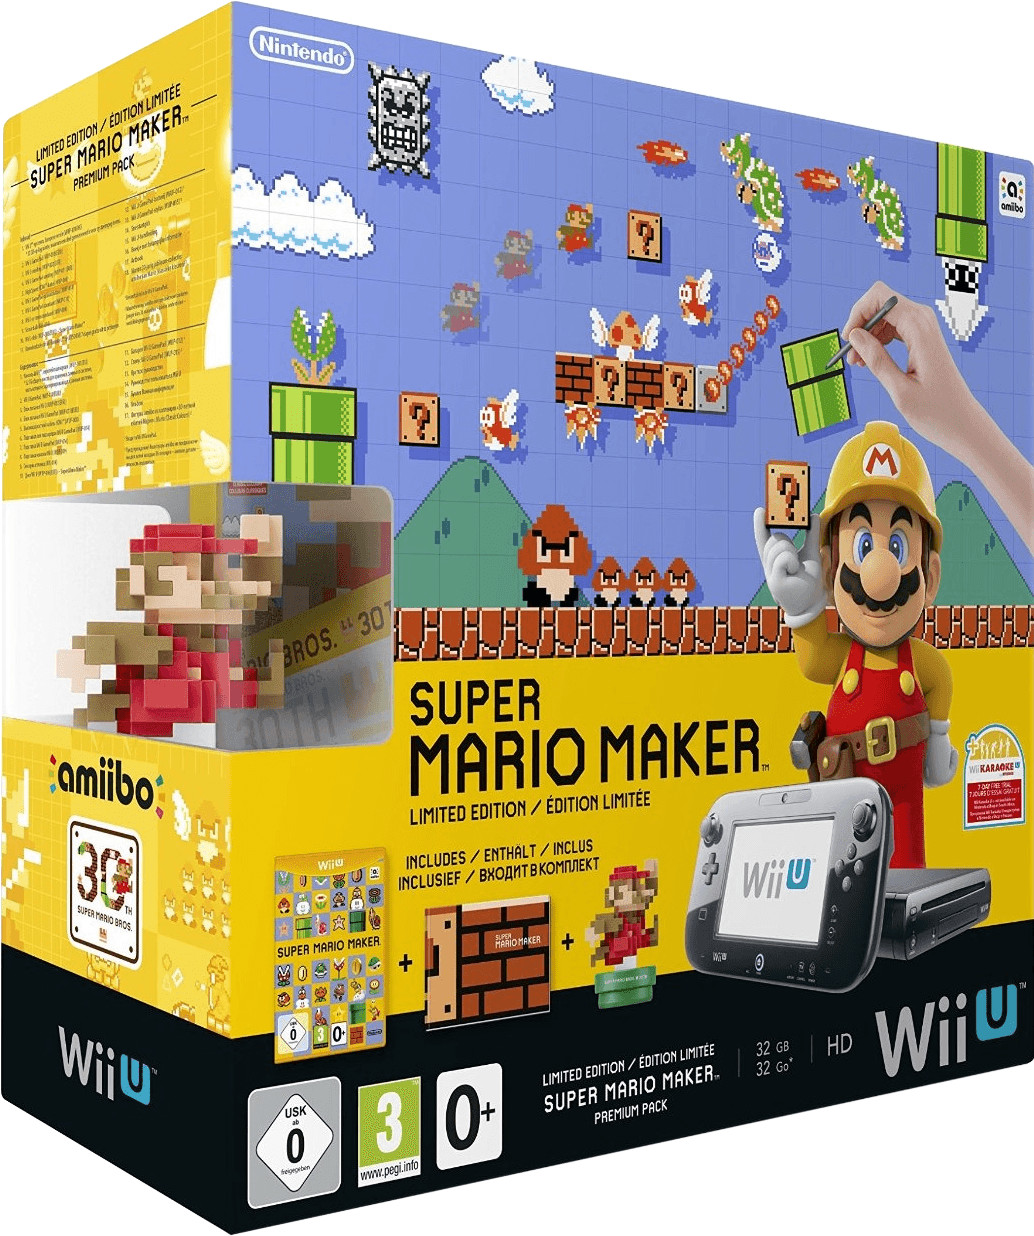 Nintendo Wii U Super Mario Maker Premium Pack Limited Edition